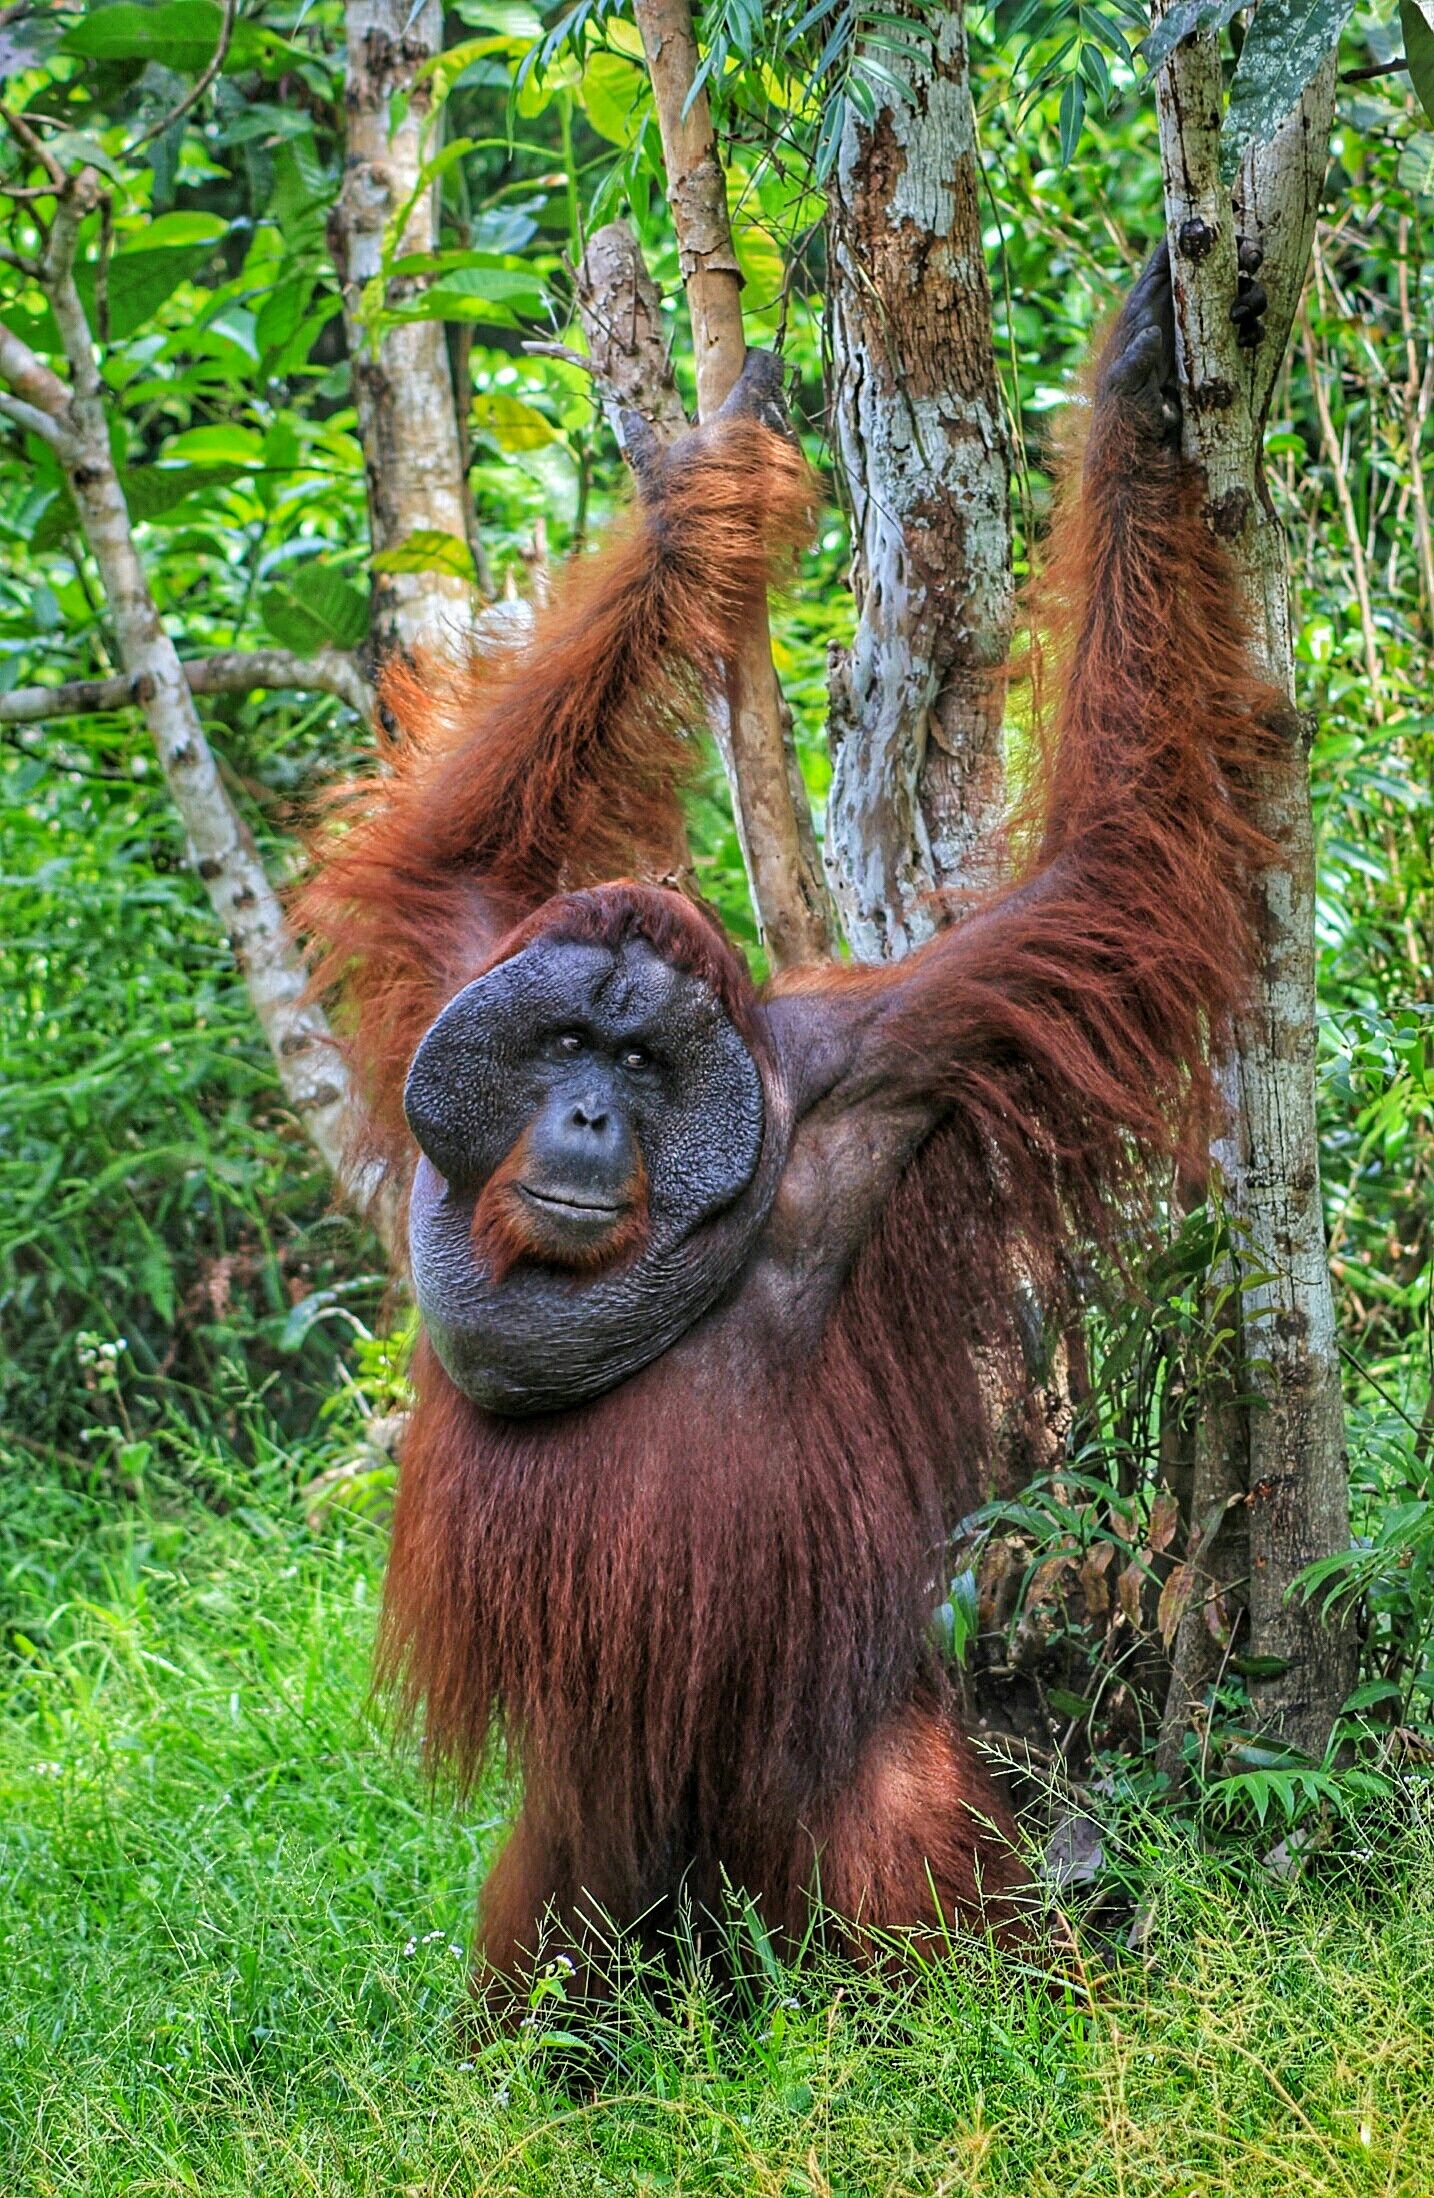 Male Bornean orangutan | Wild Animals | Pinterest | Bornean ...